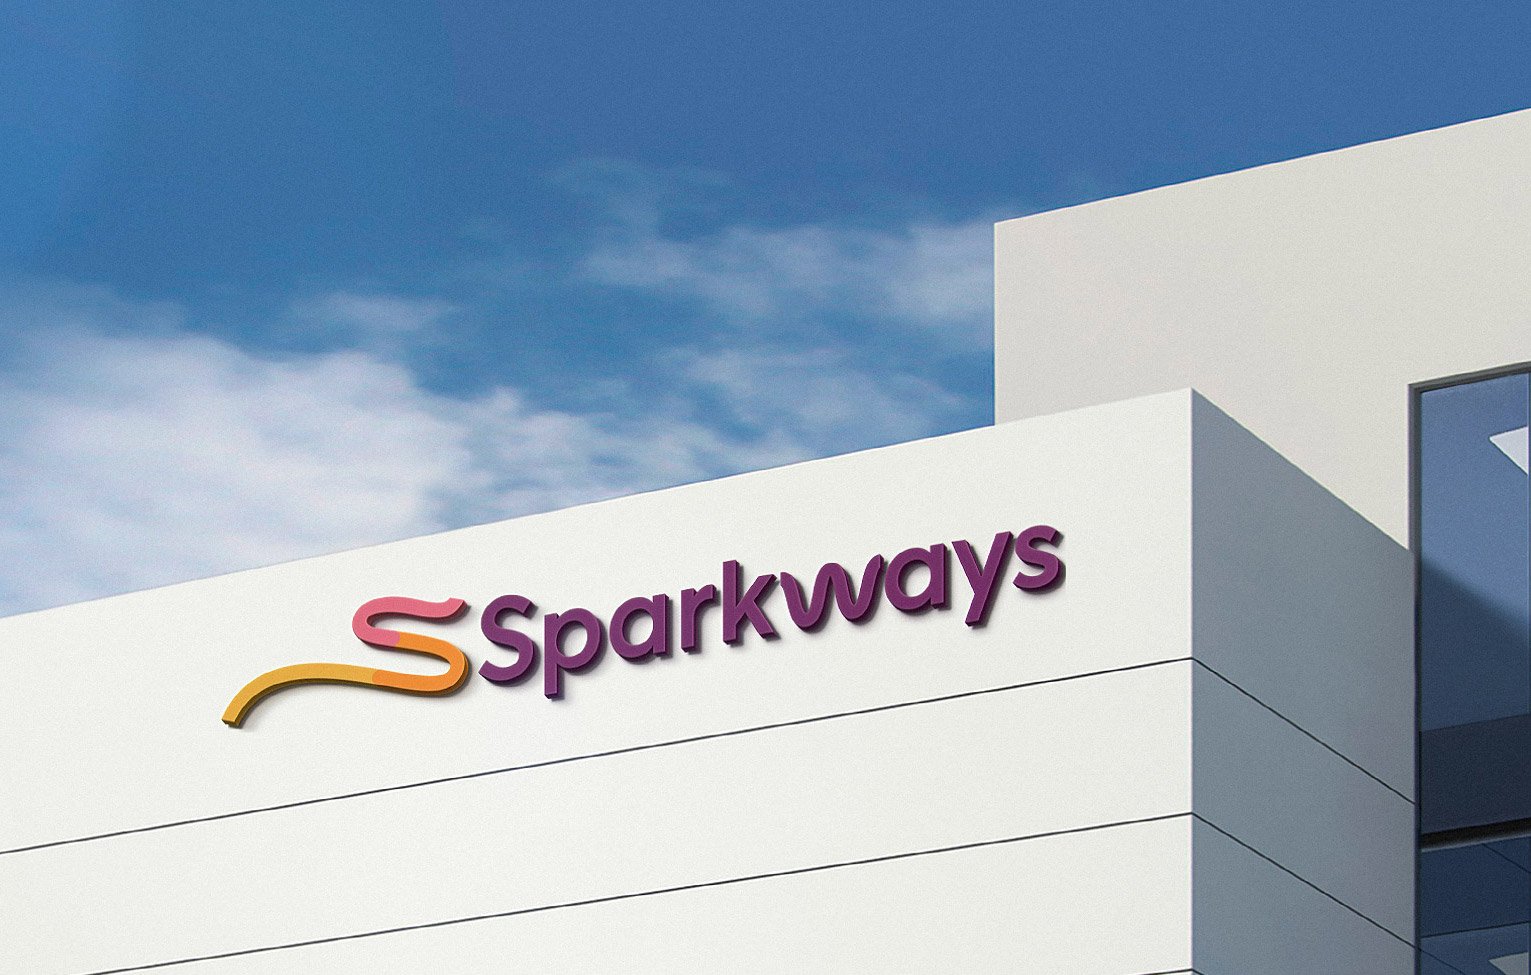 Sparkways logo on building, custom signage